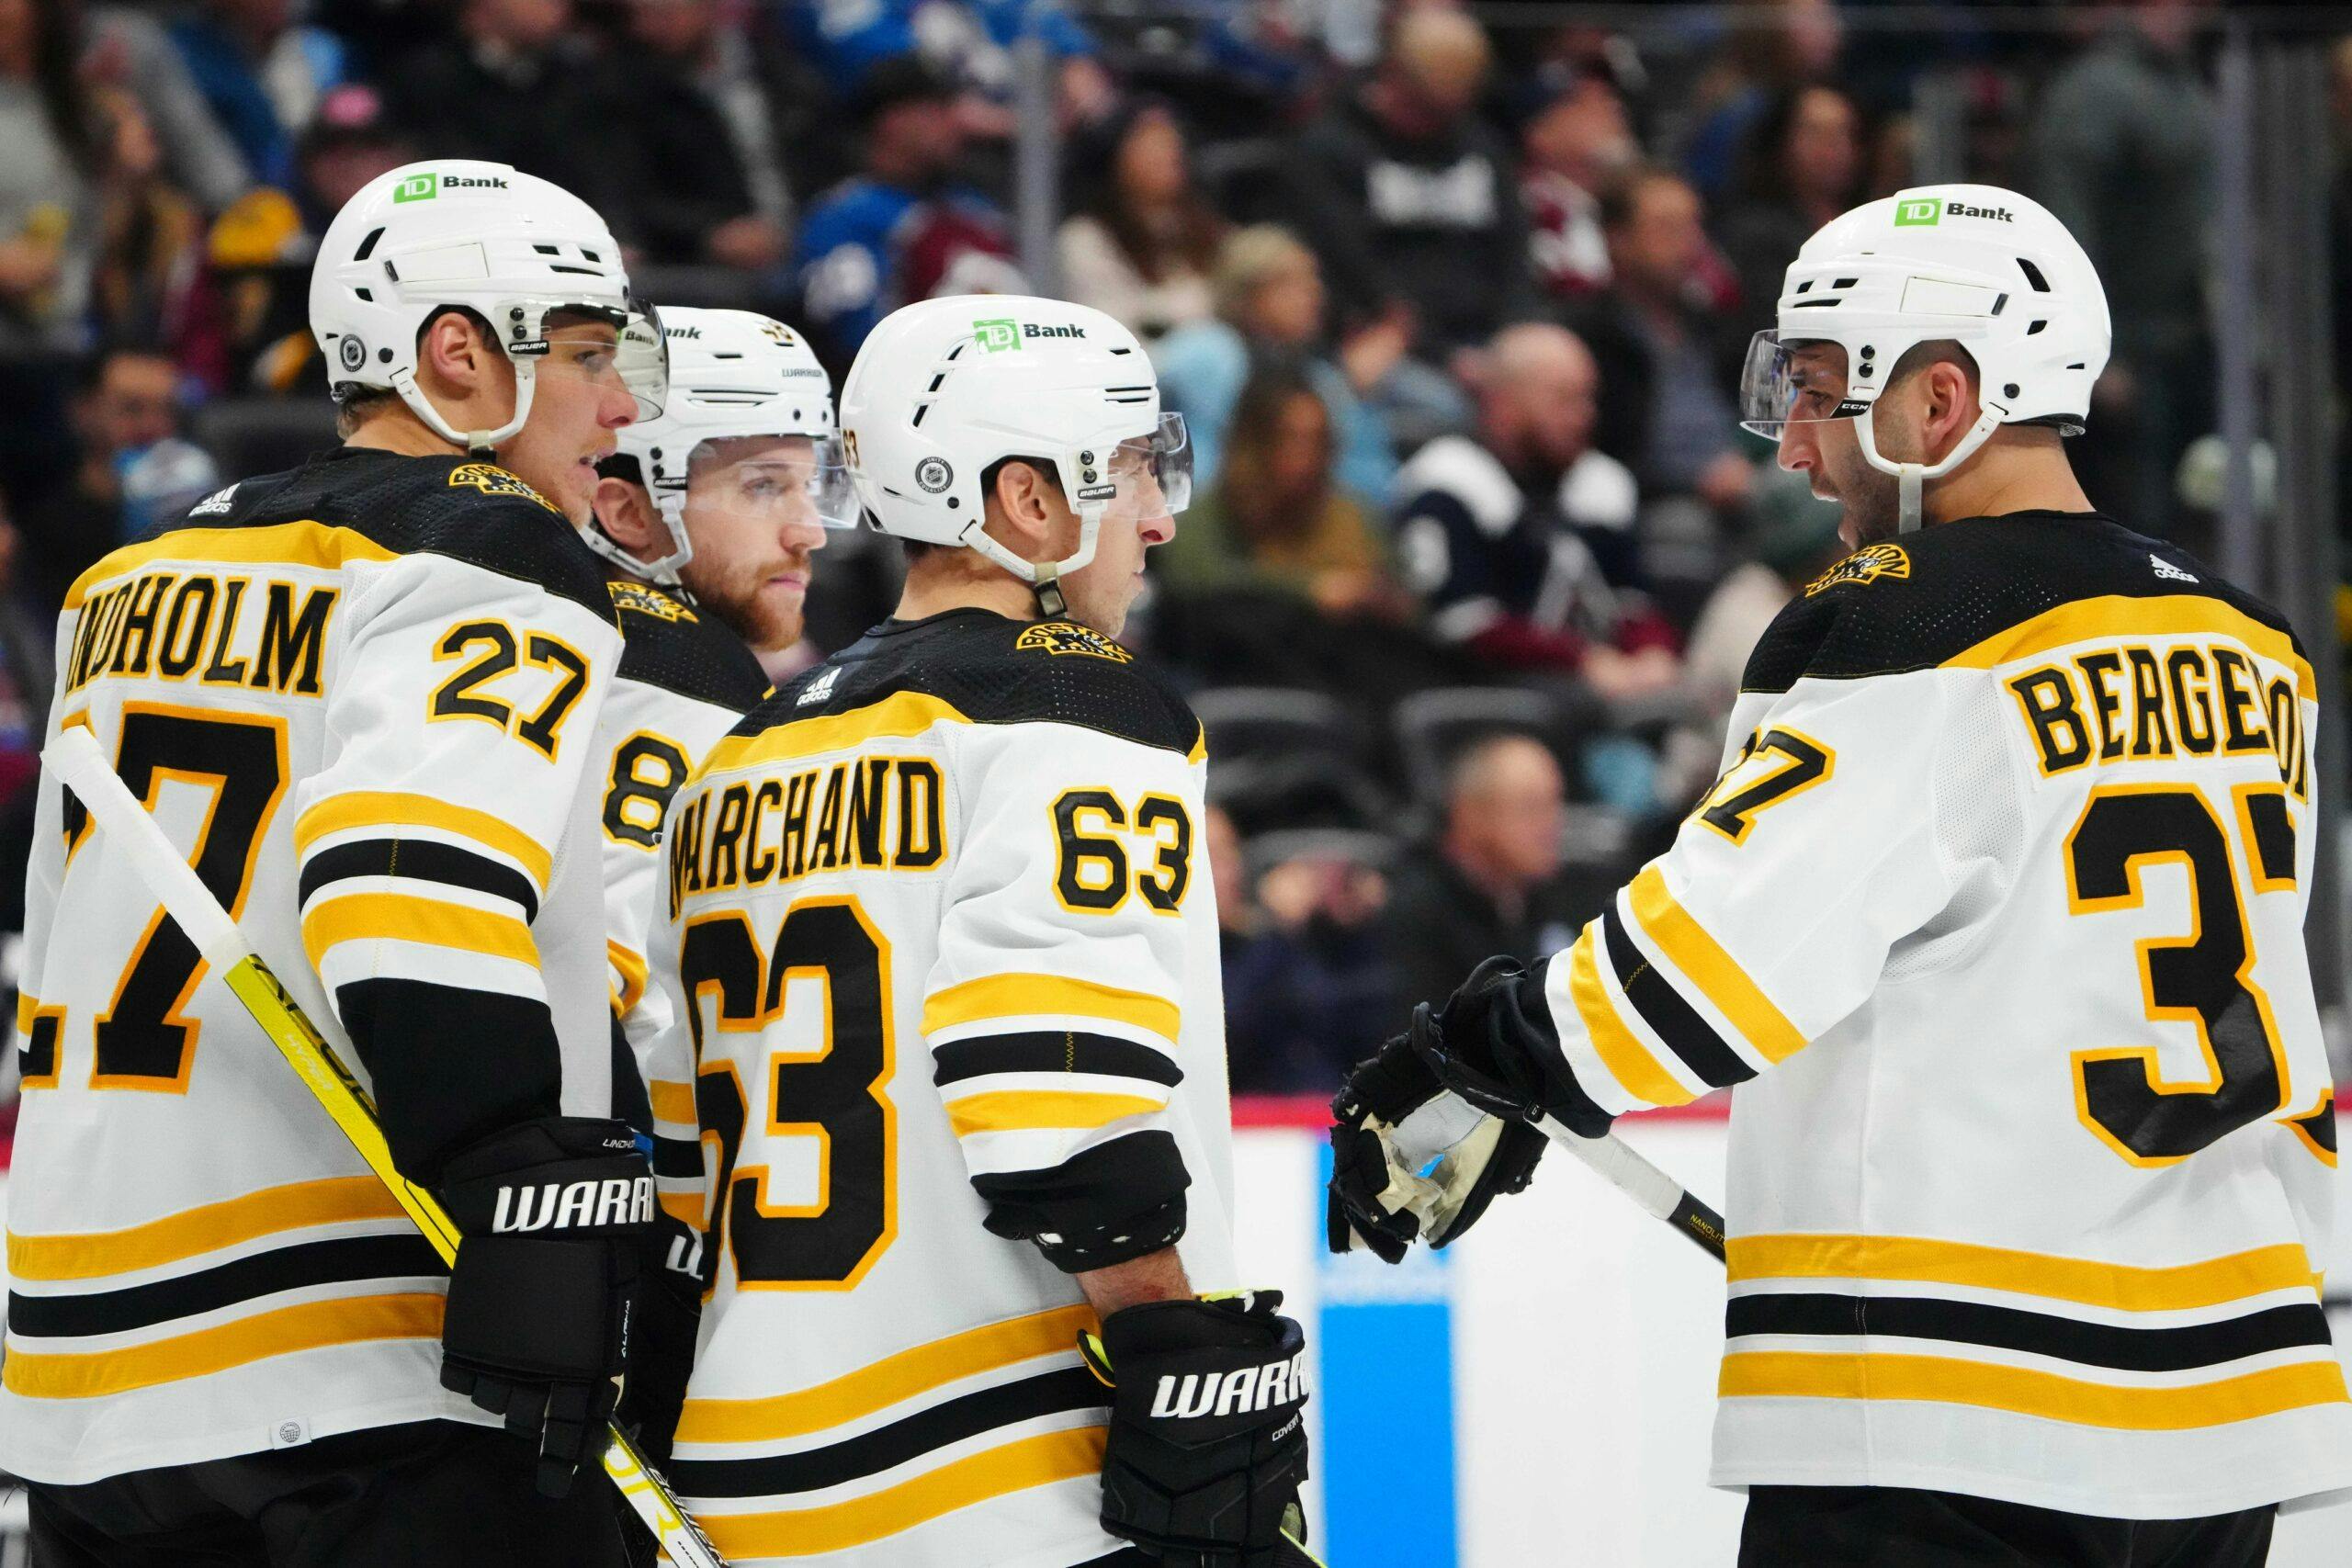 Boston Bruins: Suffer First Home Loss In Regulation To Seattle Kraken